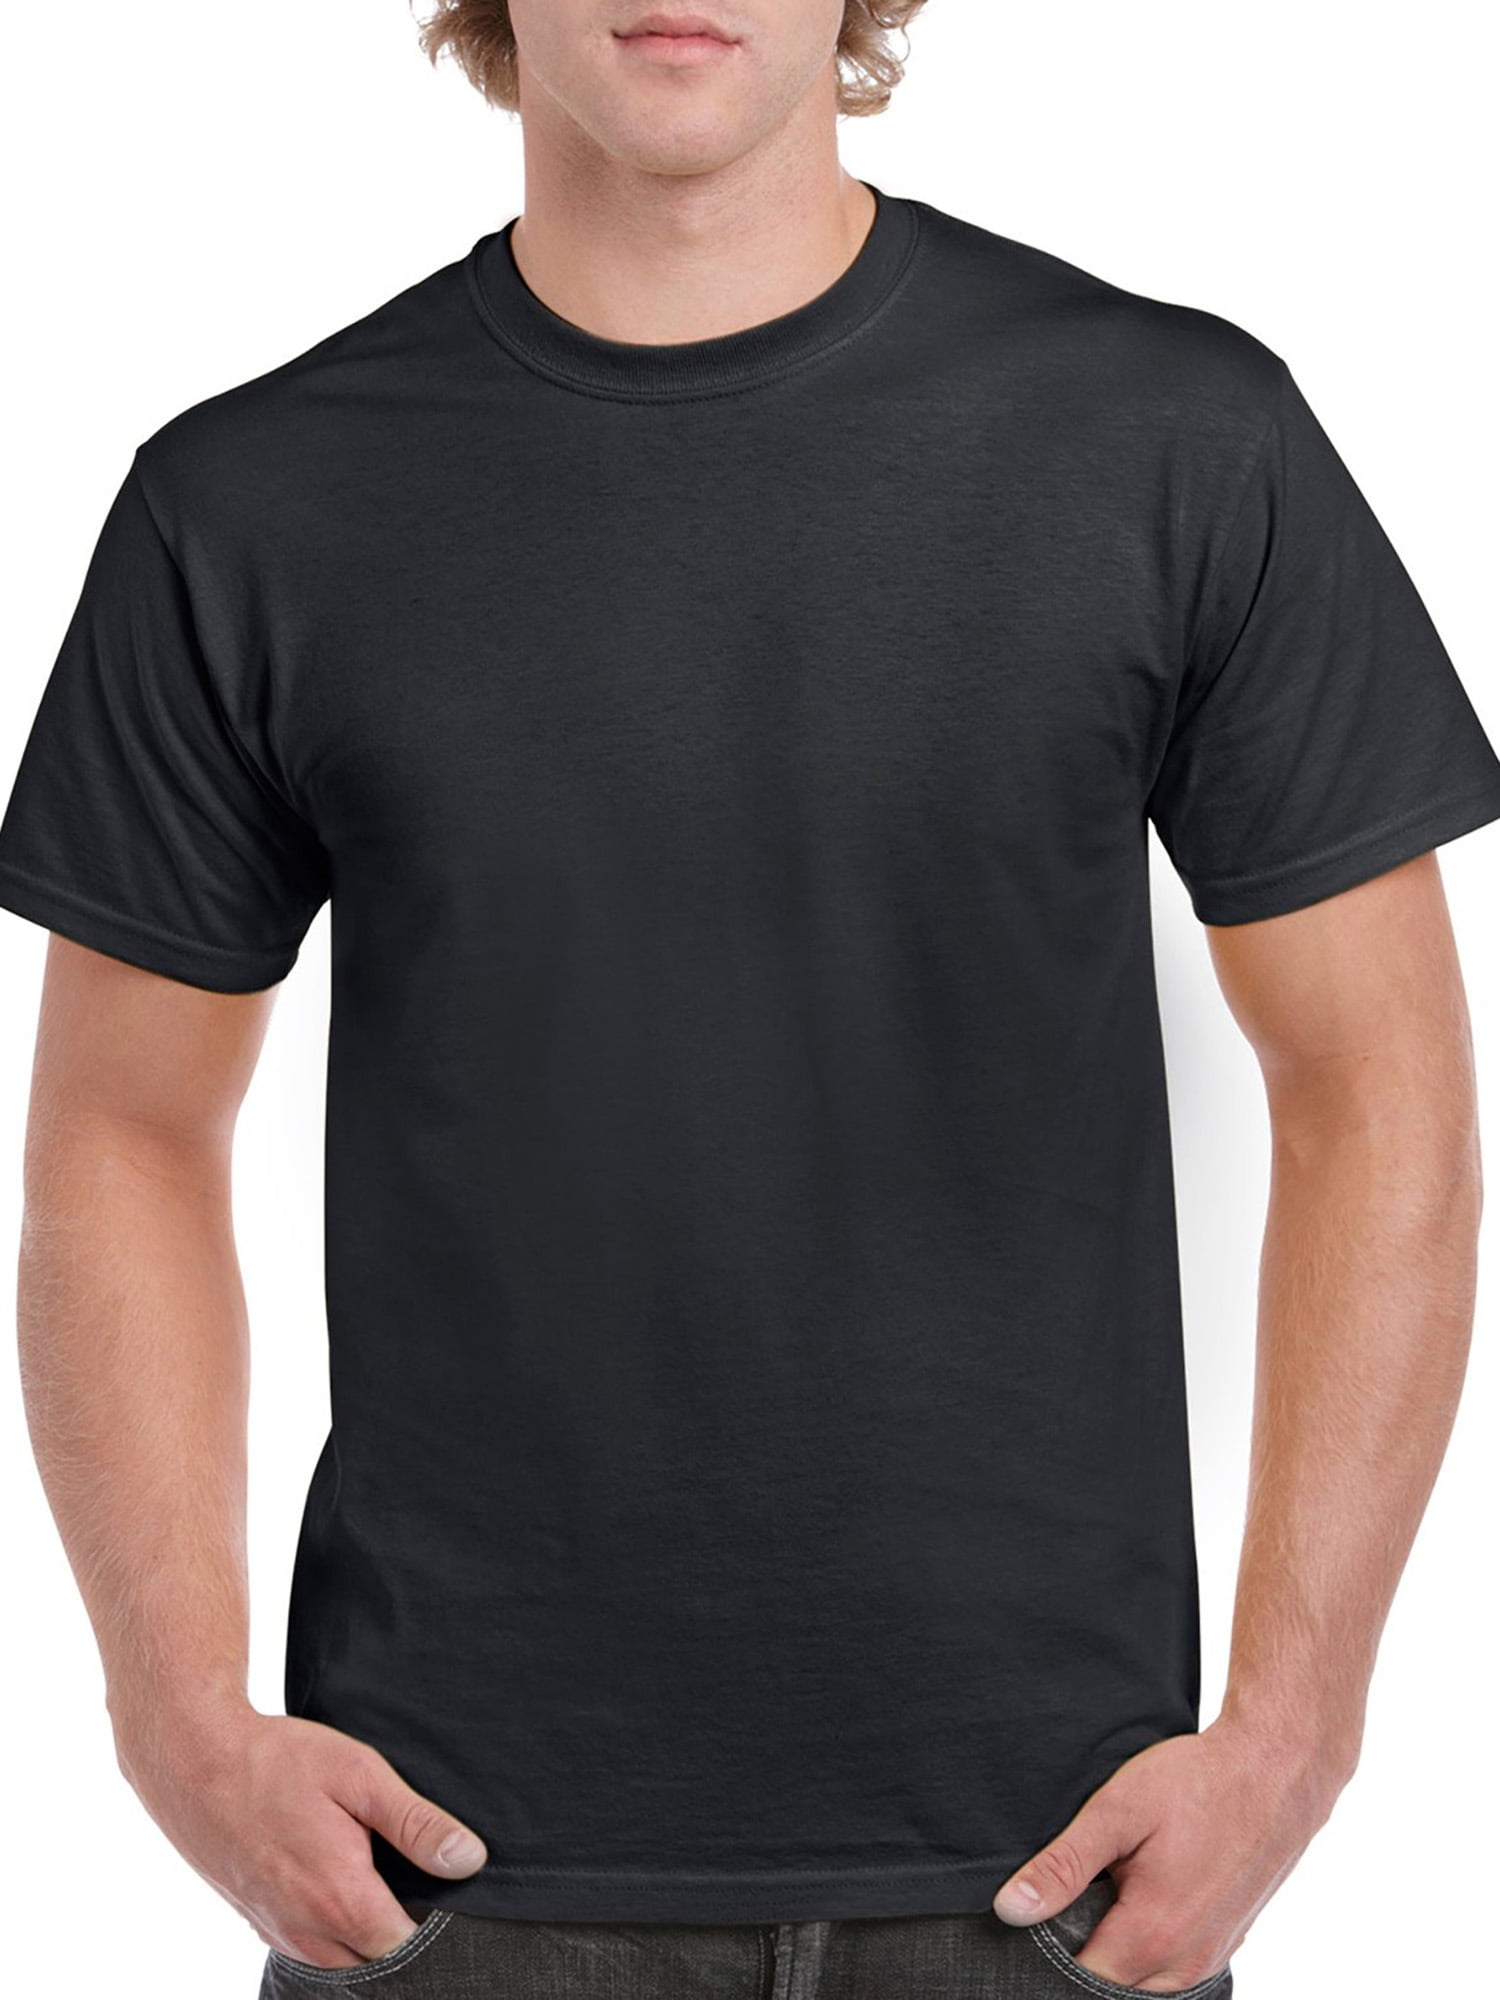 Gildan Adult Cotton Short Sleeve Black Crew T-Shirt, 1-Pack, M